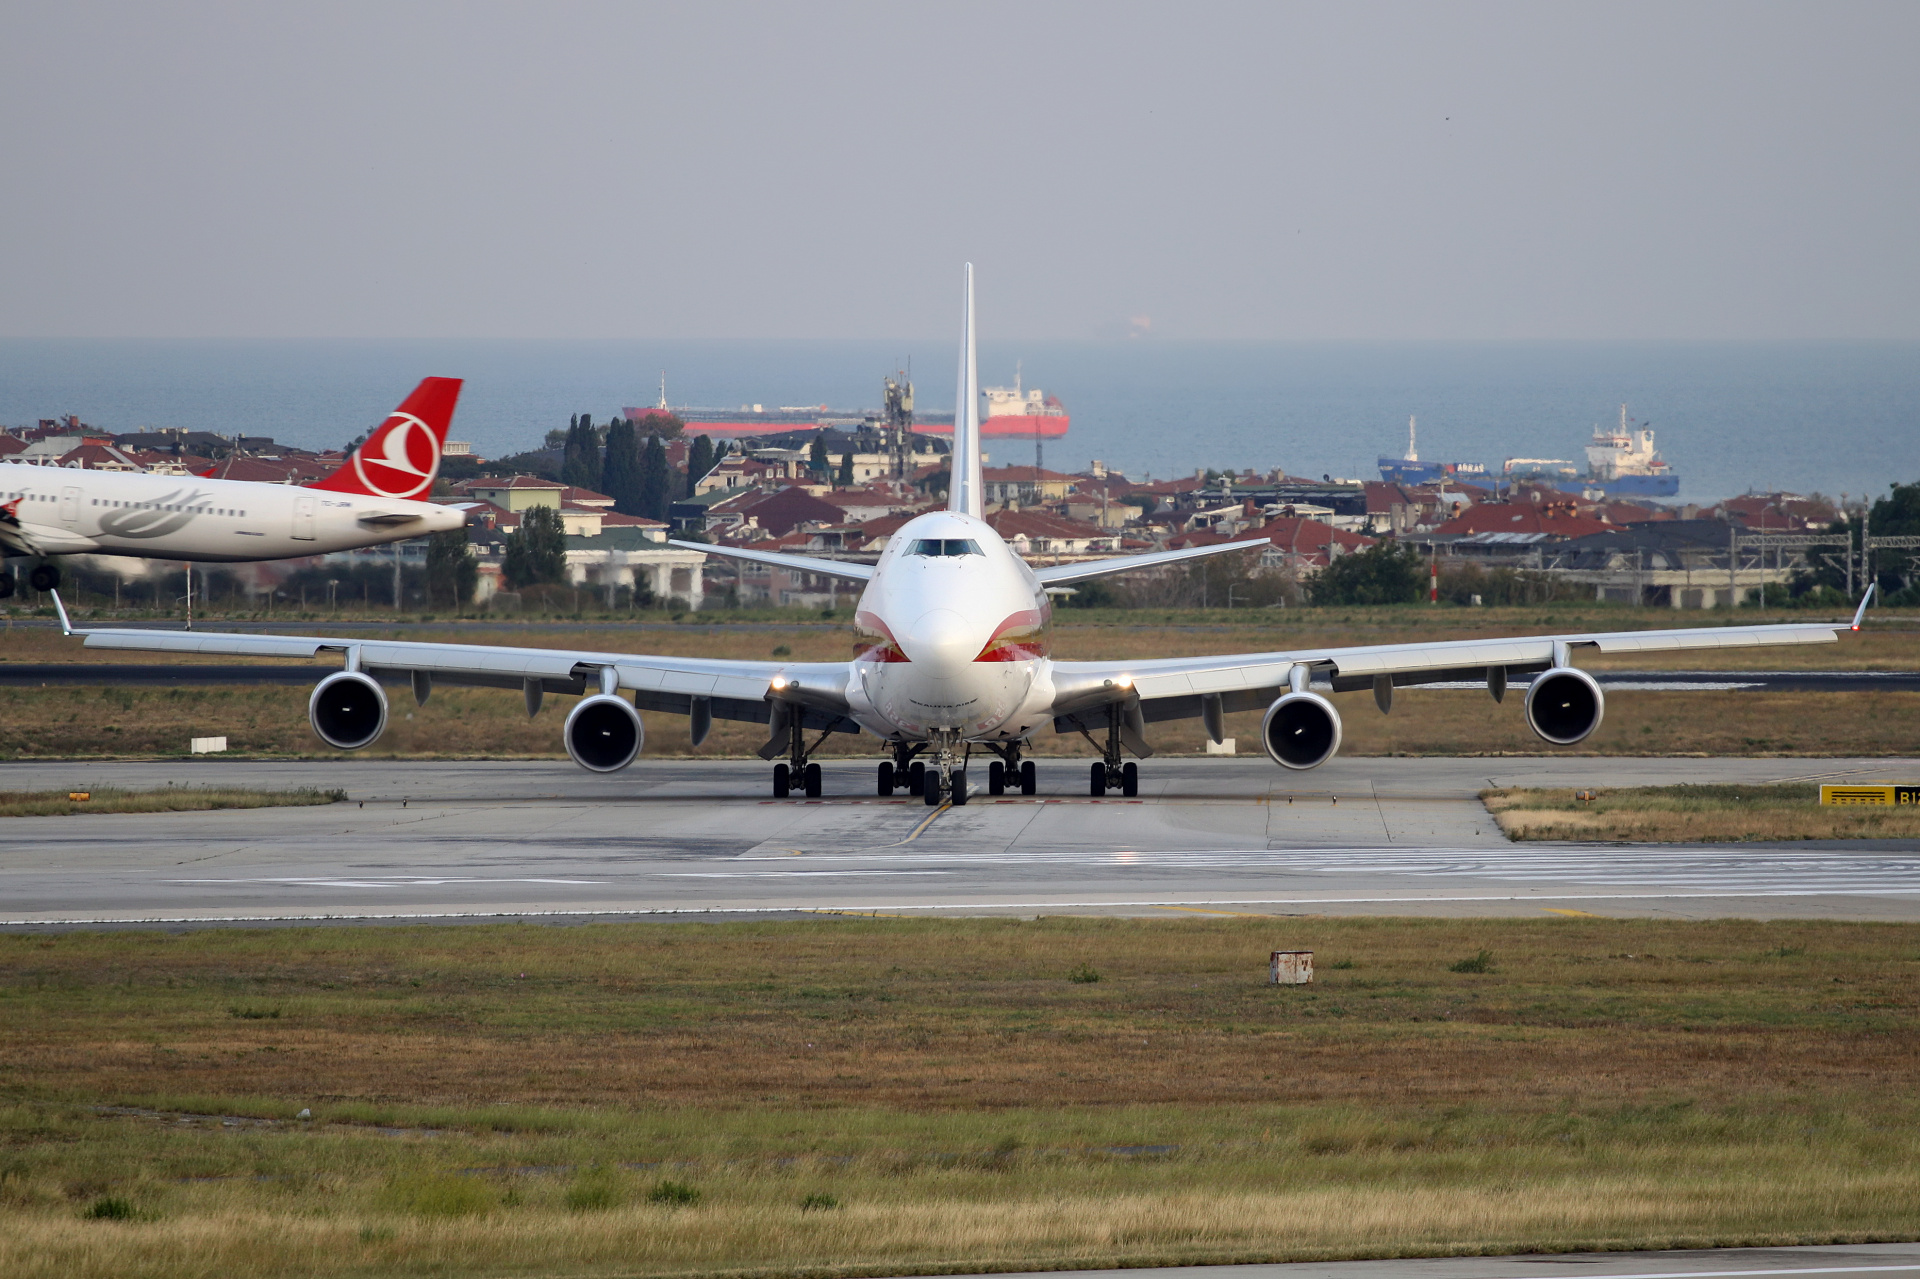 N705CK, Kalitta Air (Samoloty » Port Lotniczy im. Atatürka w Stambule » Boeing 747-400F)